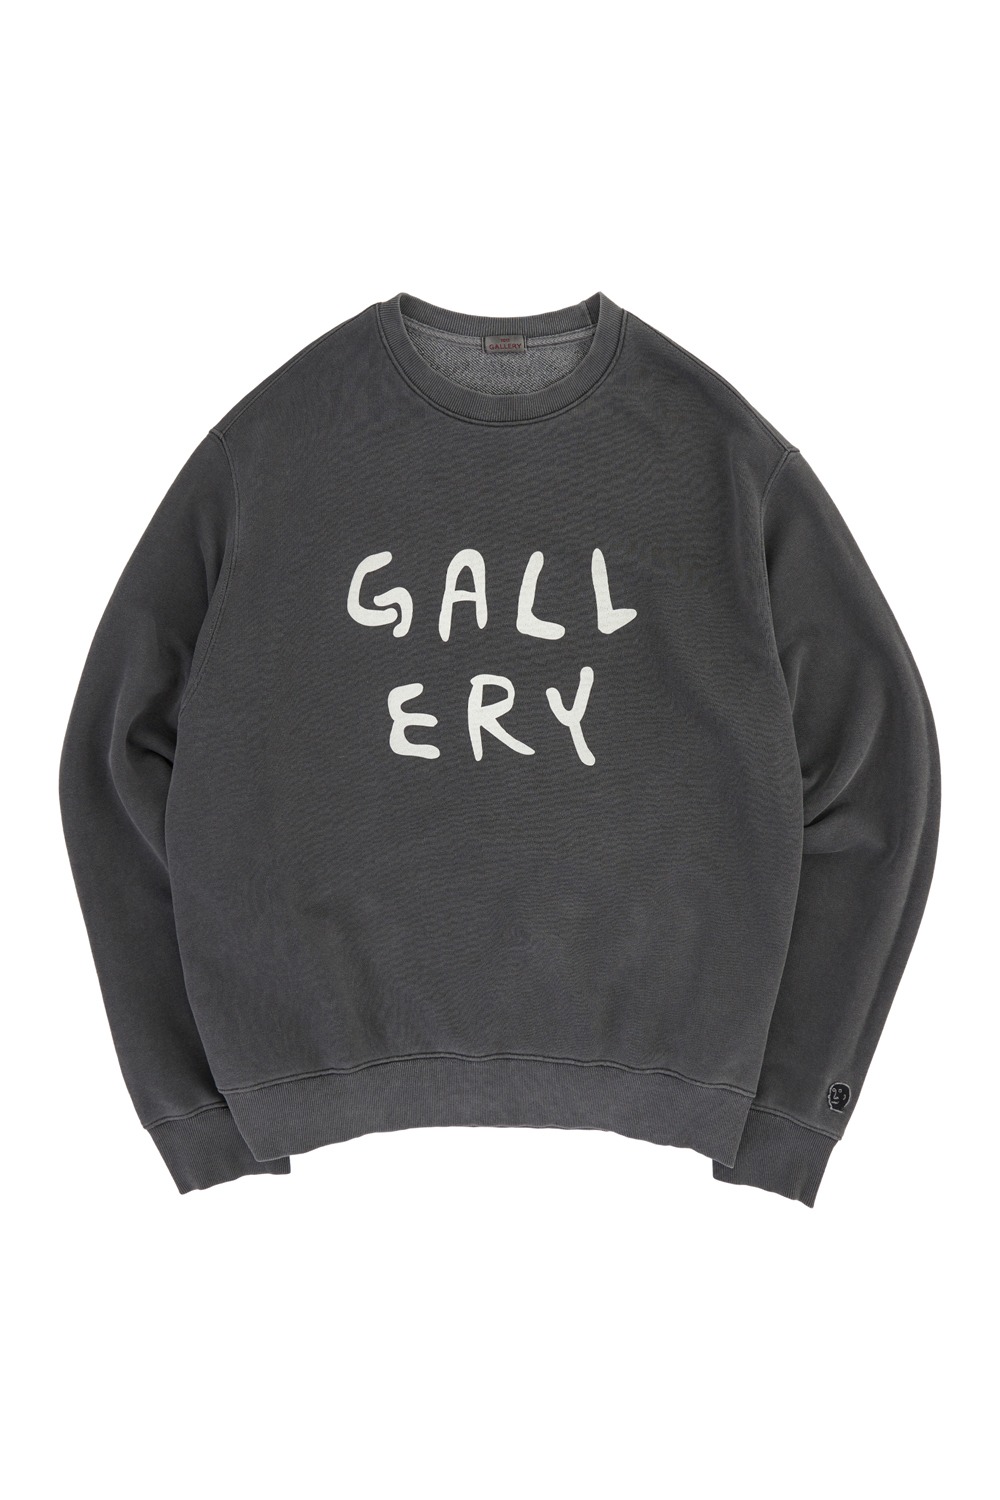 Gallery Logo Graphic Sweat Shirt - Charcoal Grey